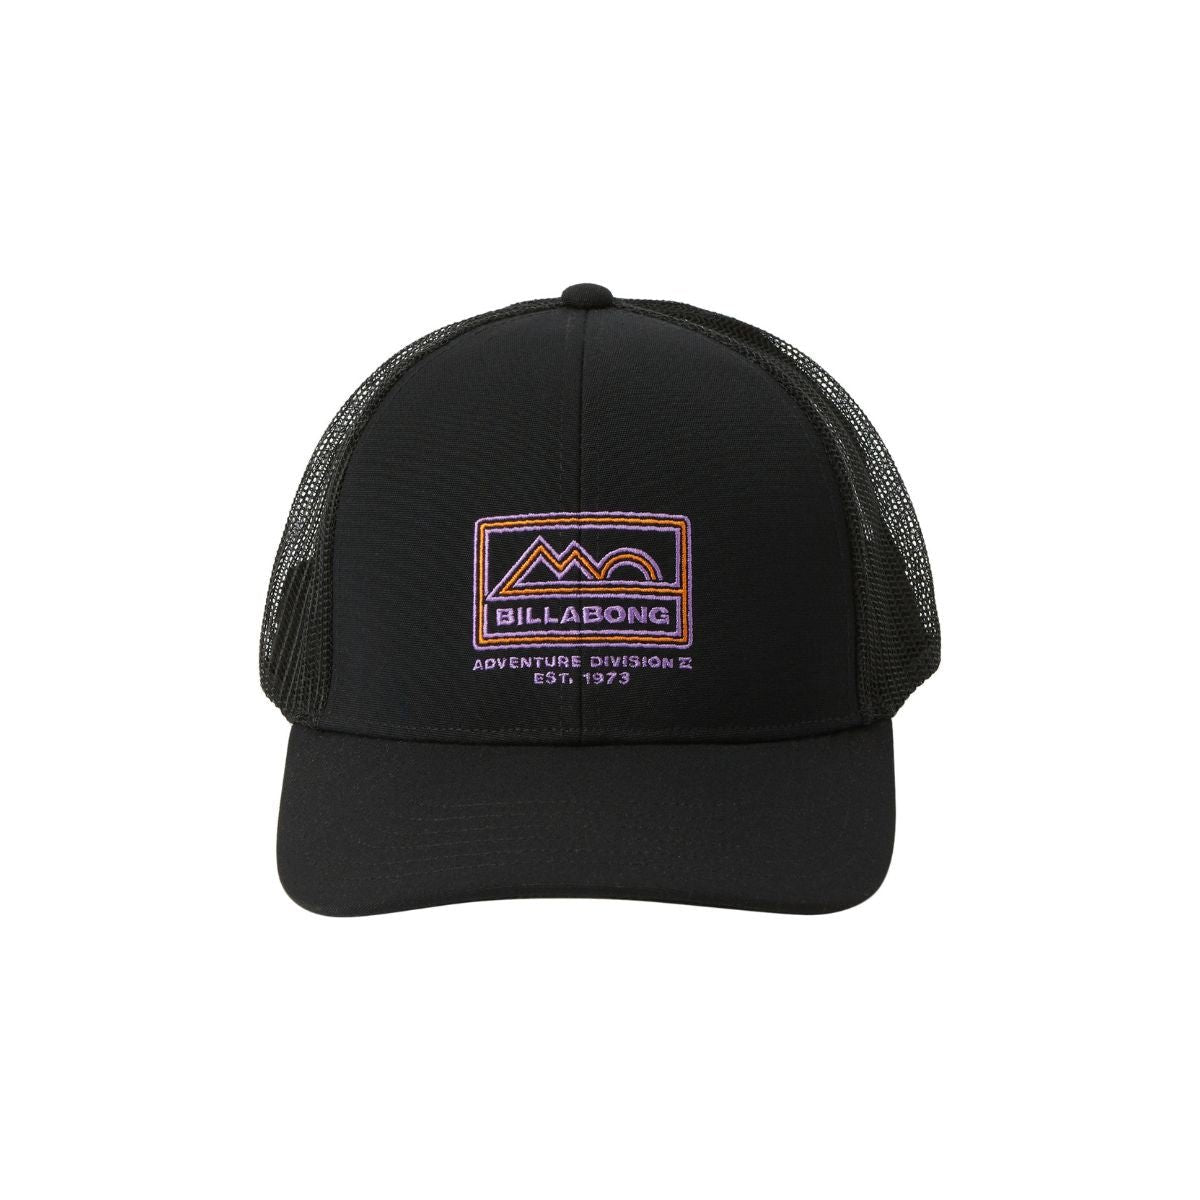 Hat Walled in Black Billabong A/Div Trucker